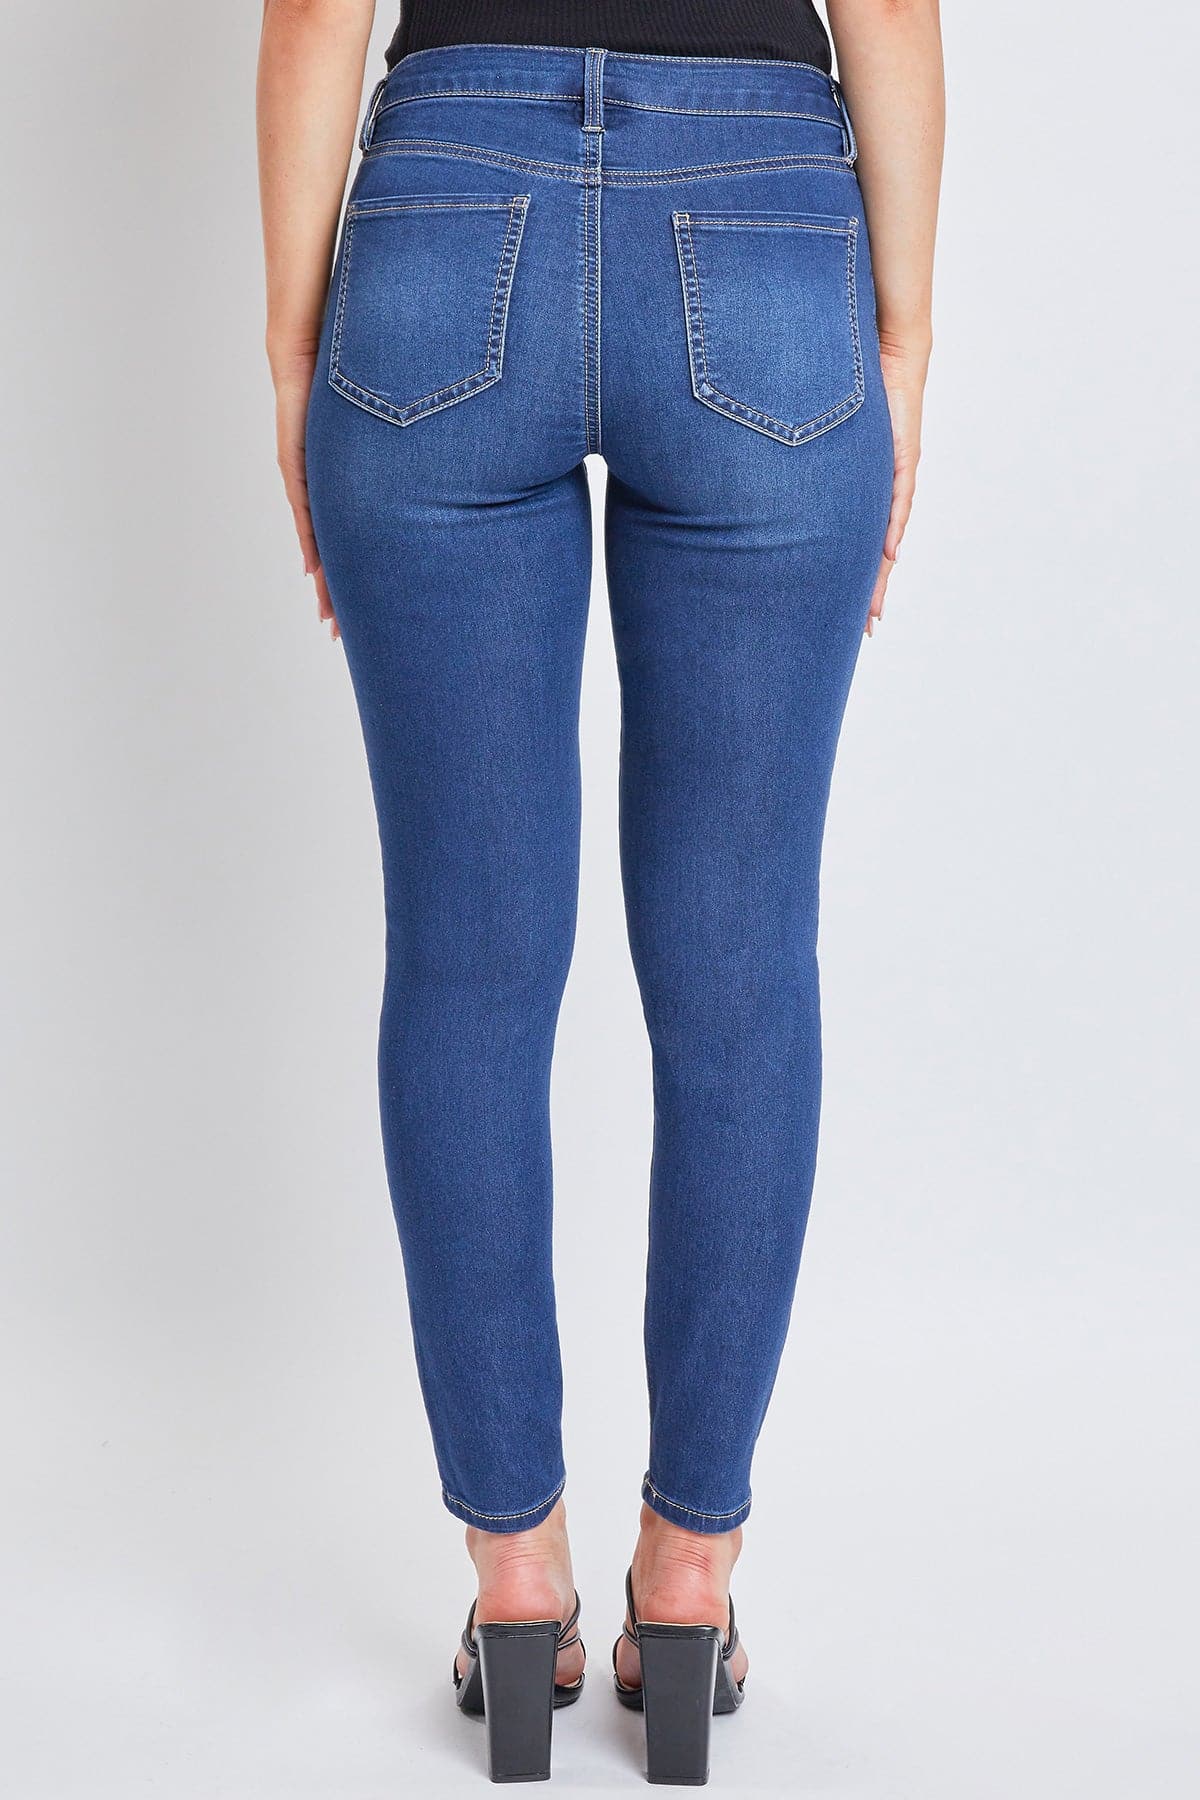 Women's HyperDenim Super Stretchy Jeans